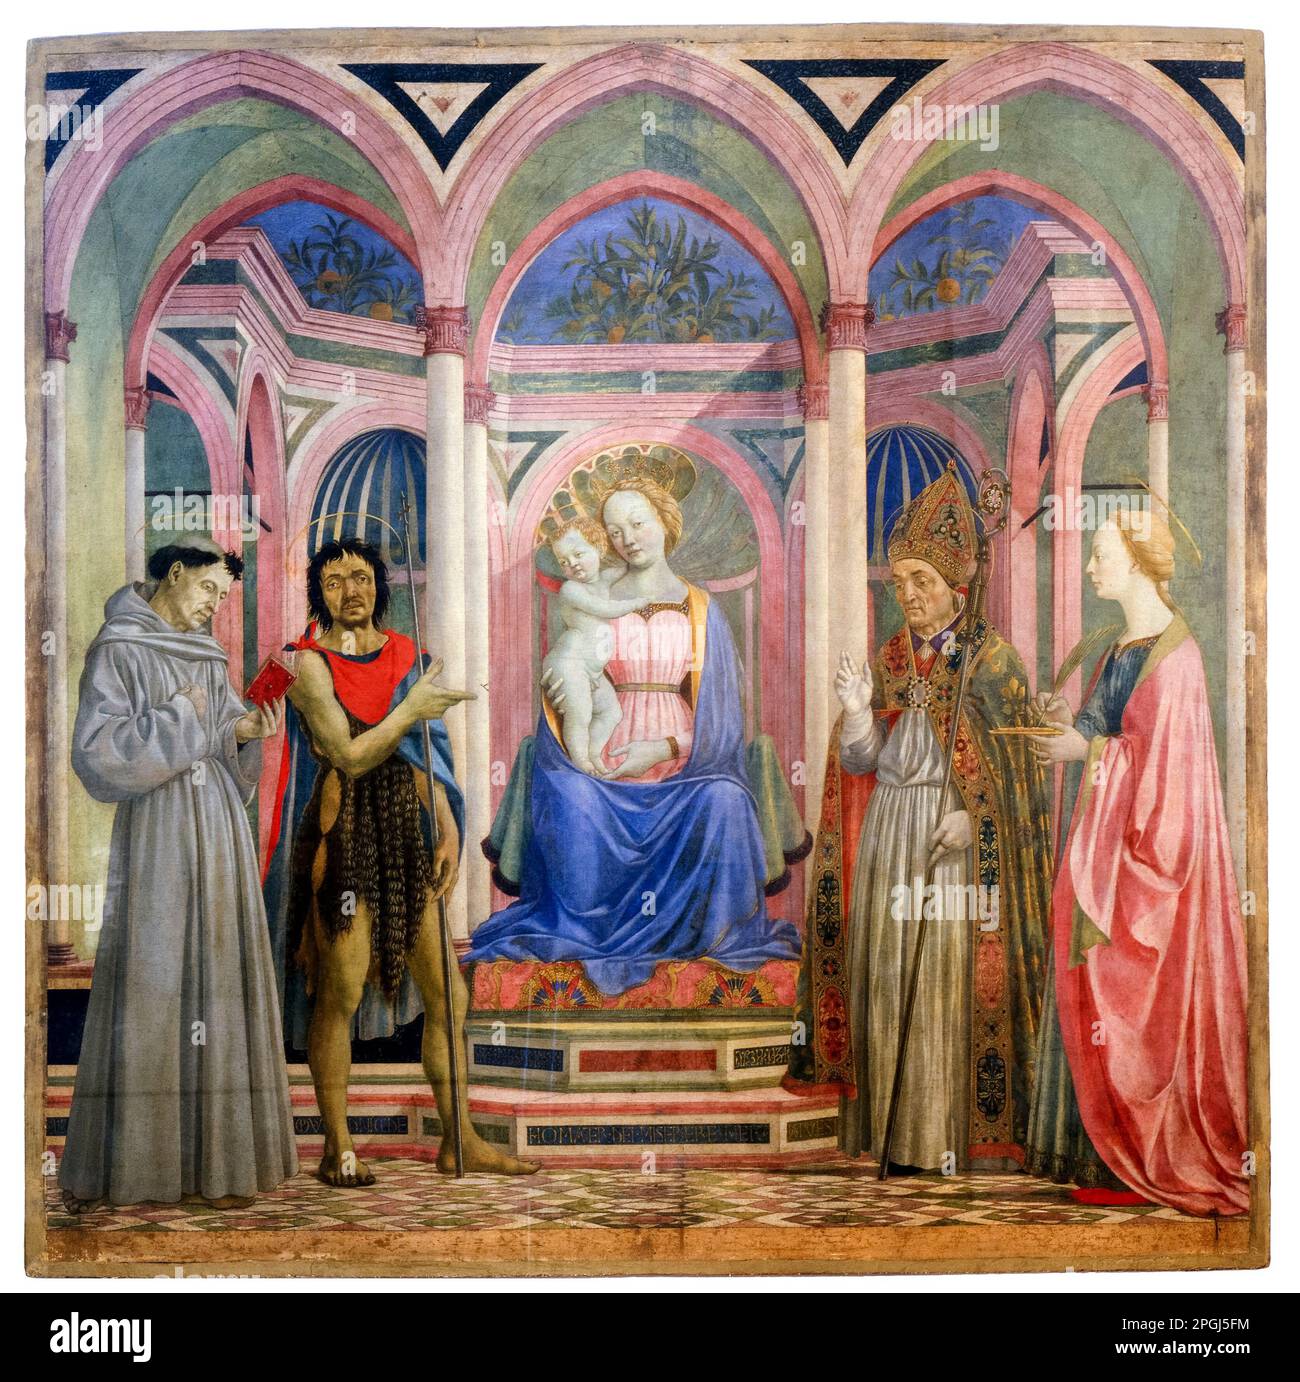 Domenico Veneziano, Altarwerk von St. Lucia de' Magnoli, Gemälde im Fresko auf Leinwand, 1445-1447 Stockfoto